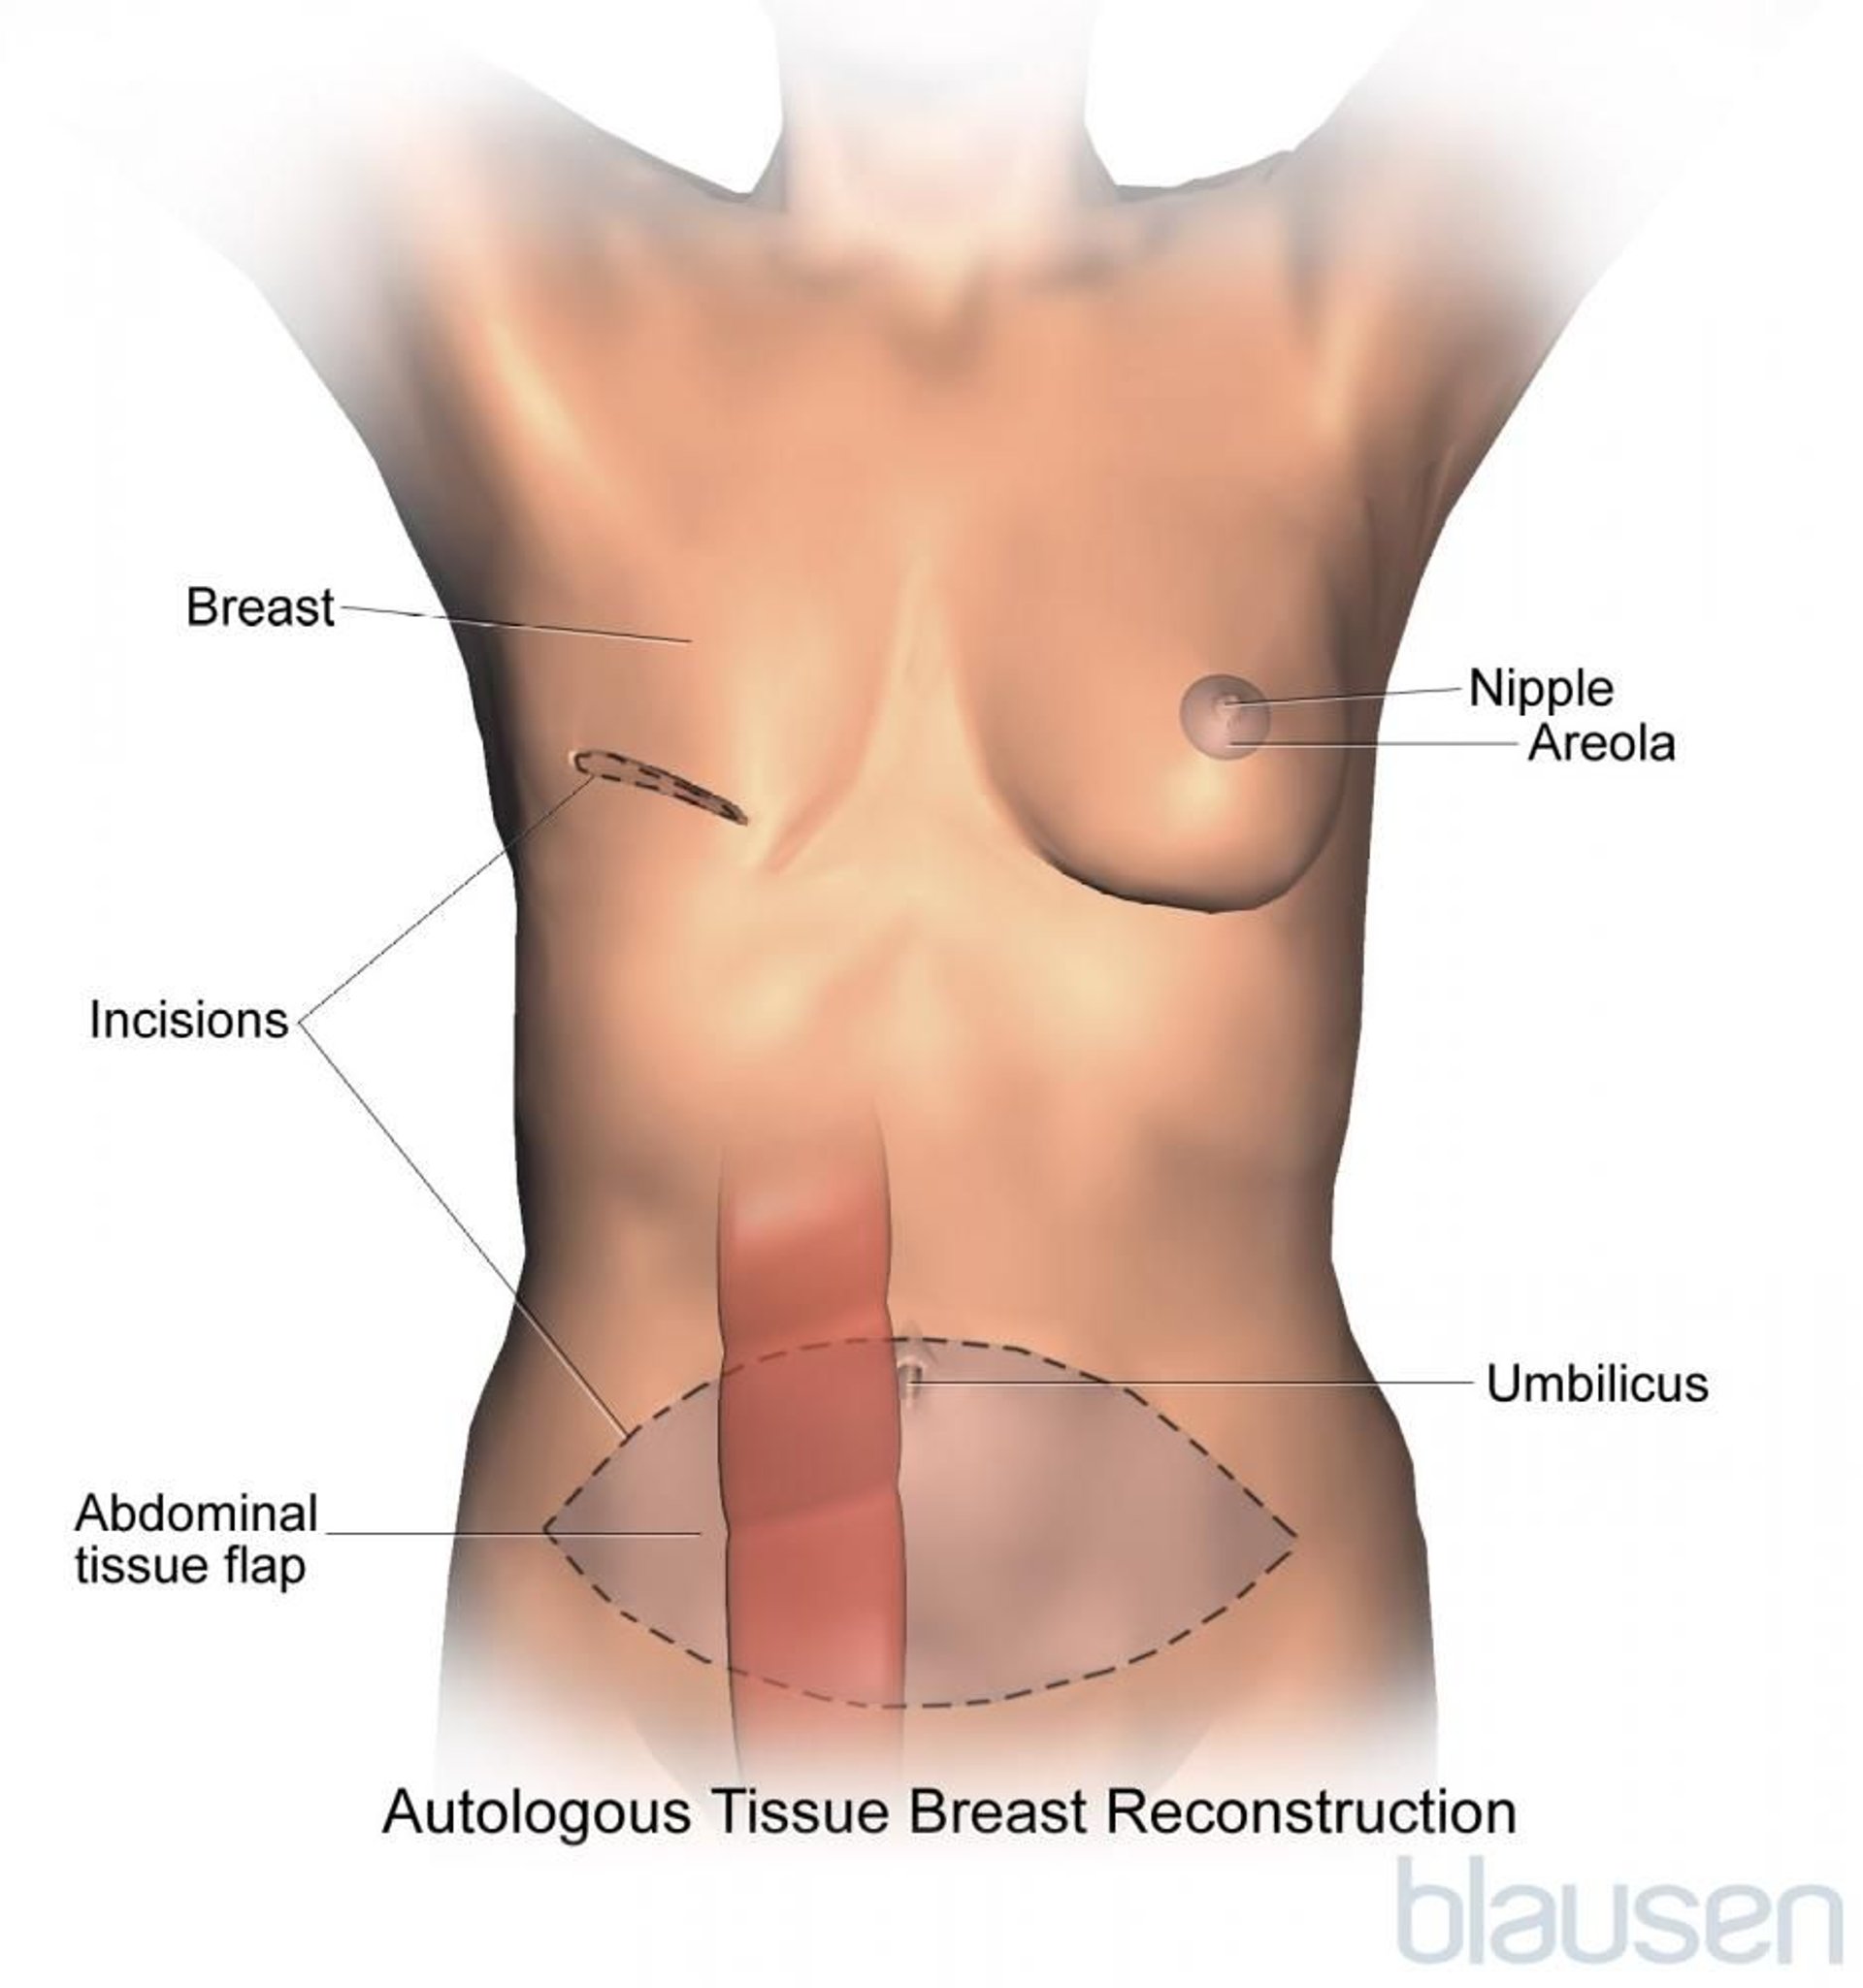 Breast Reconstruction Using the Transverse Rectus Abdominis Muscle (TRAM) Flap Procedure